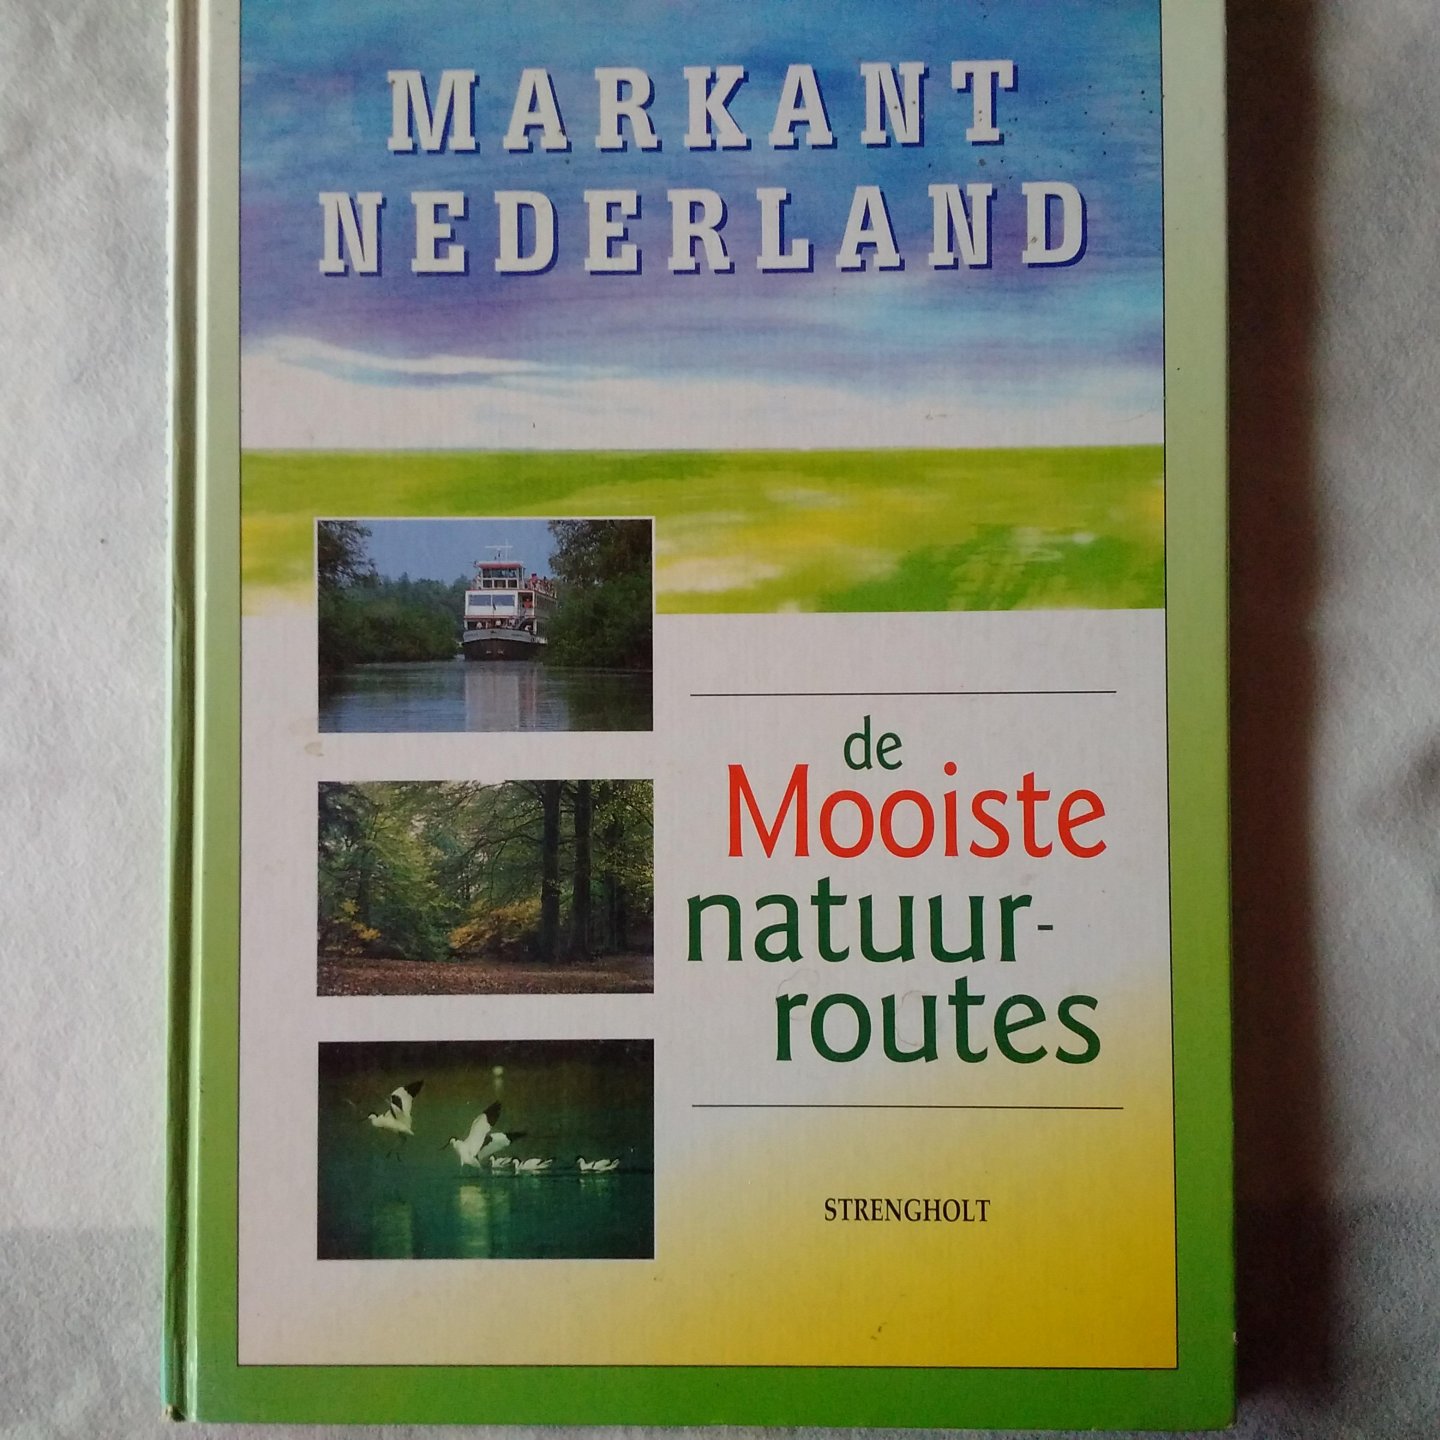 Ende, Gerard van den - Markant Nederland: De mooiste natuurroutes